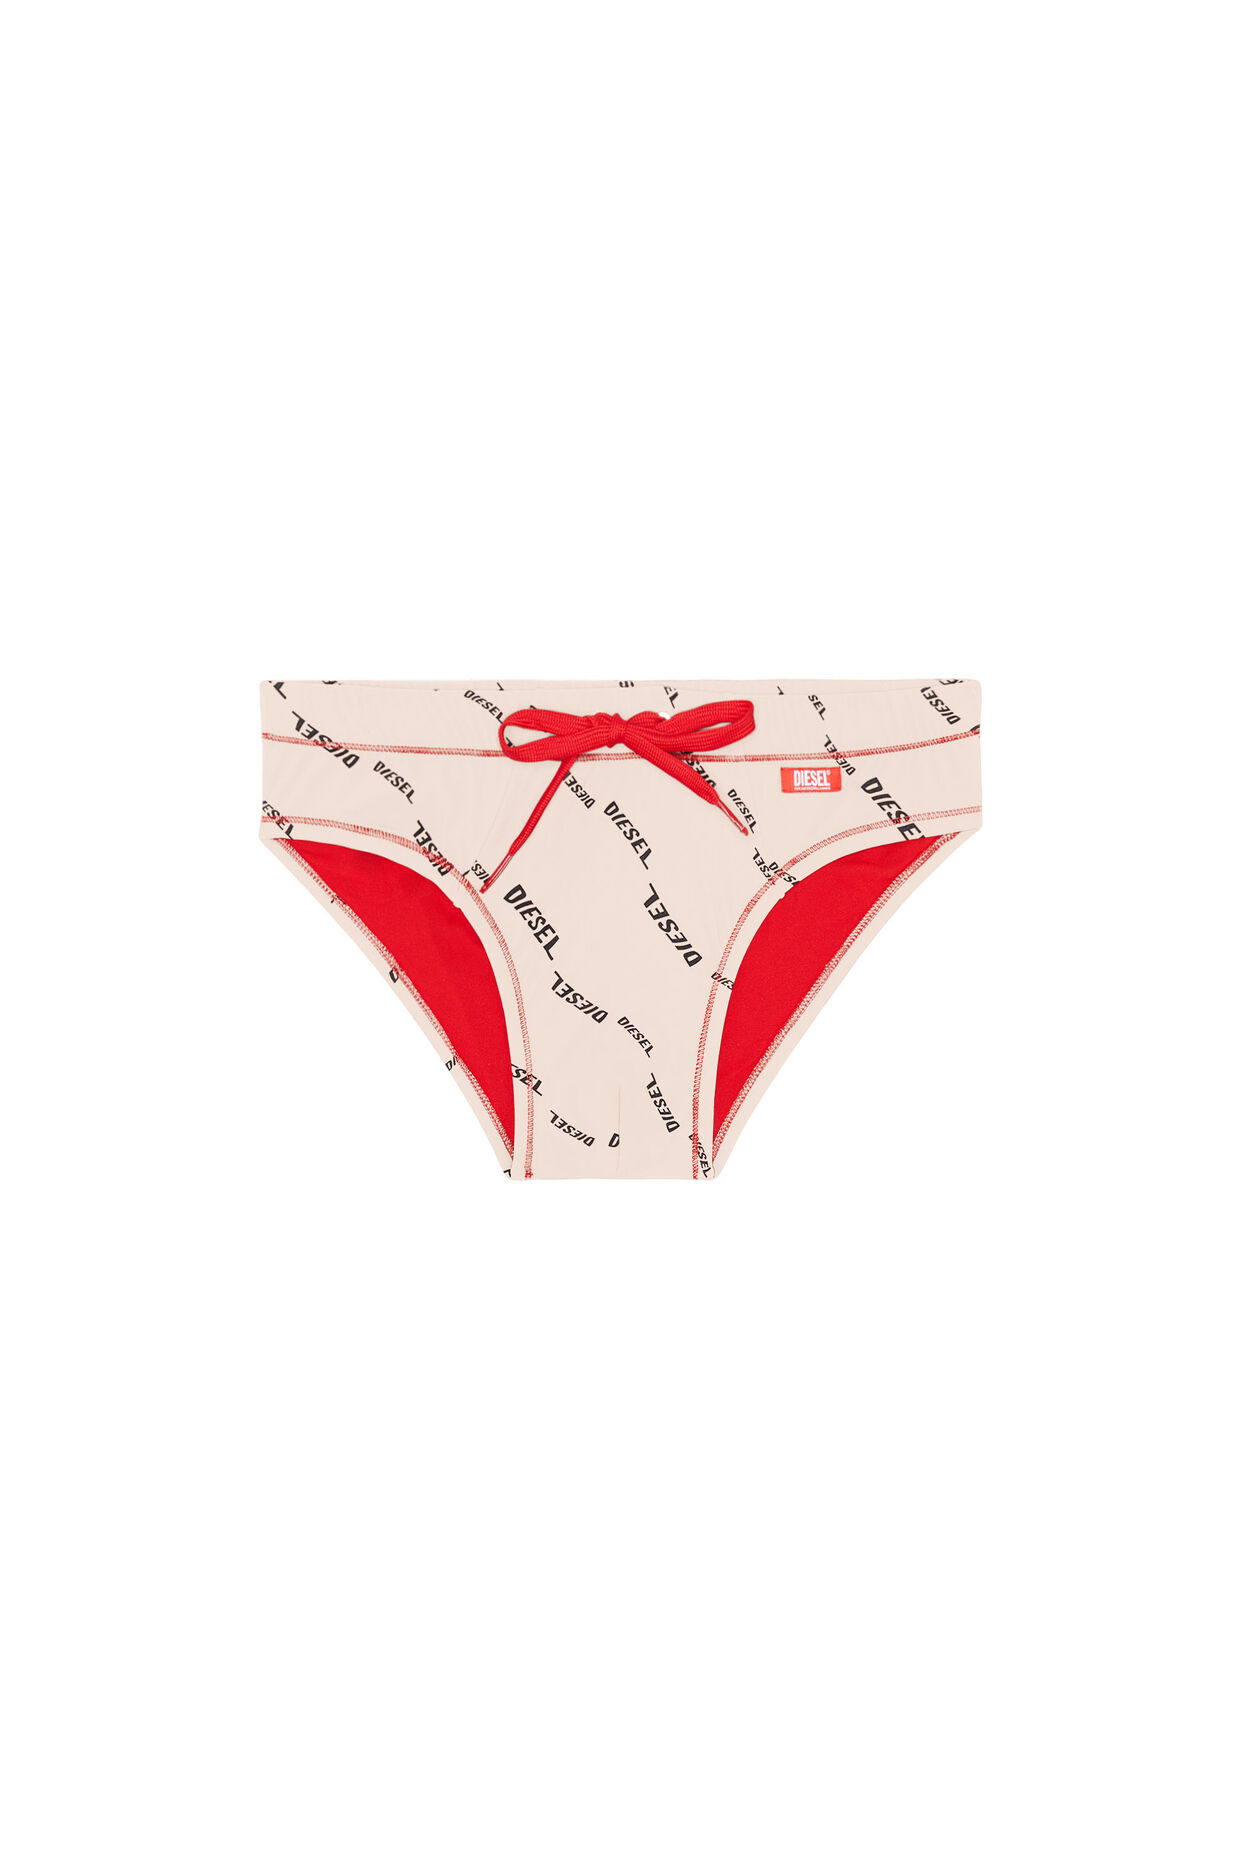 Diesel pink and red mens swim brief with drawstring waist detail